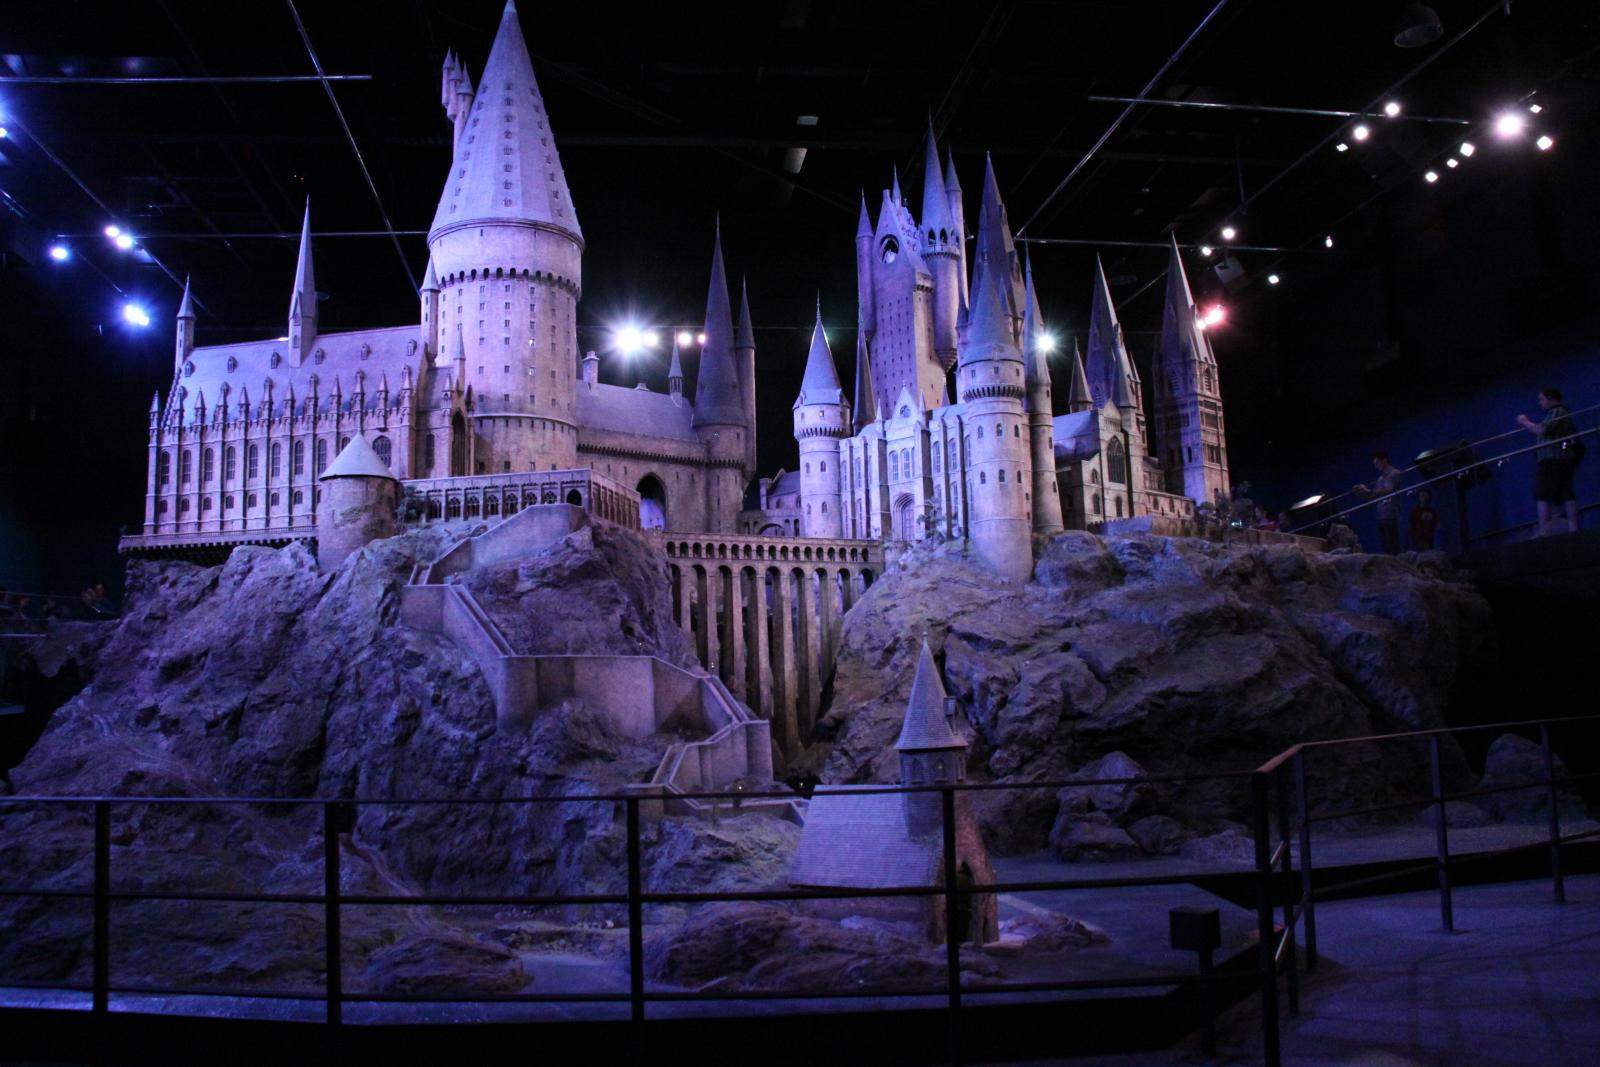 making harry potter7 The Making of Harry Potter, Warner Bros Studio London